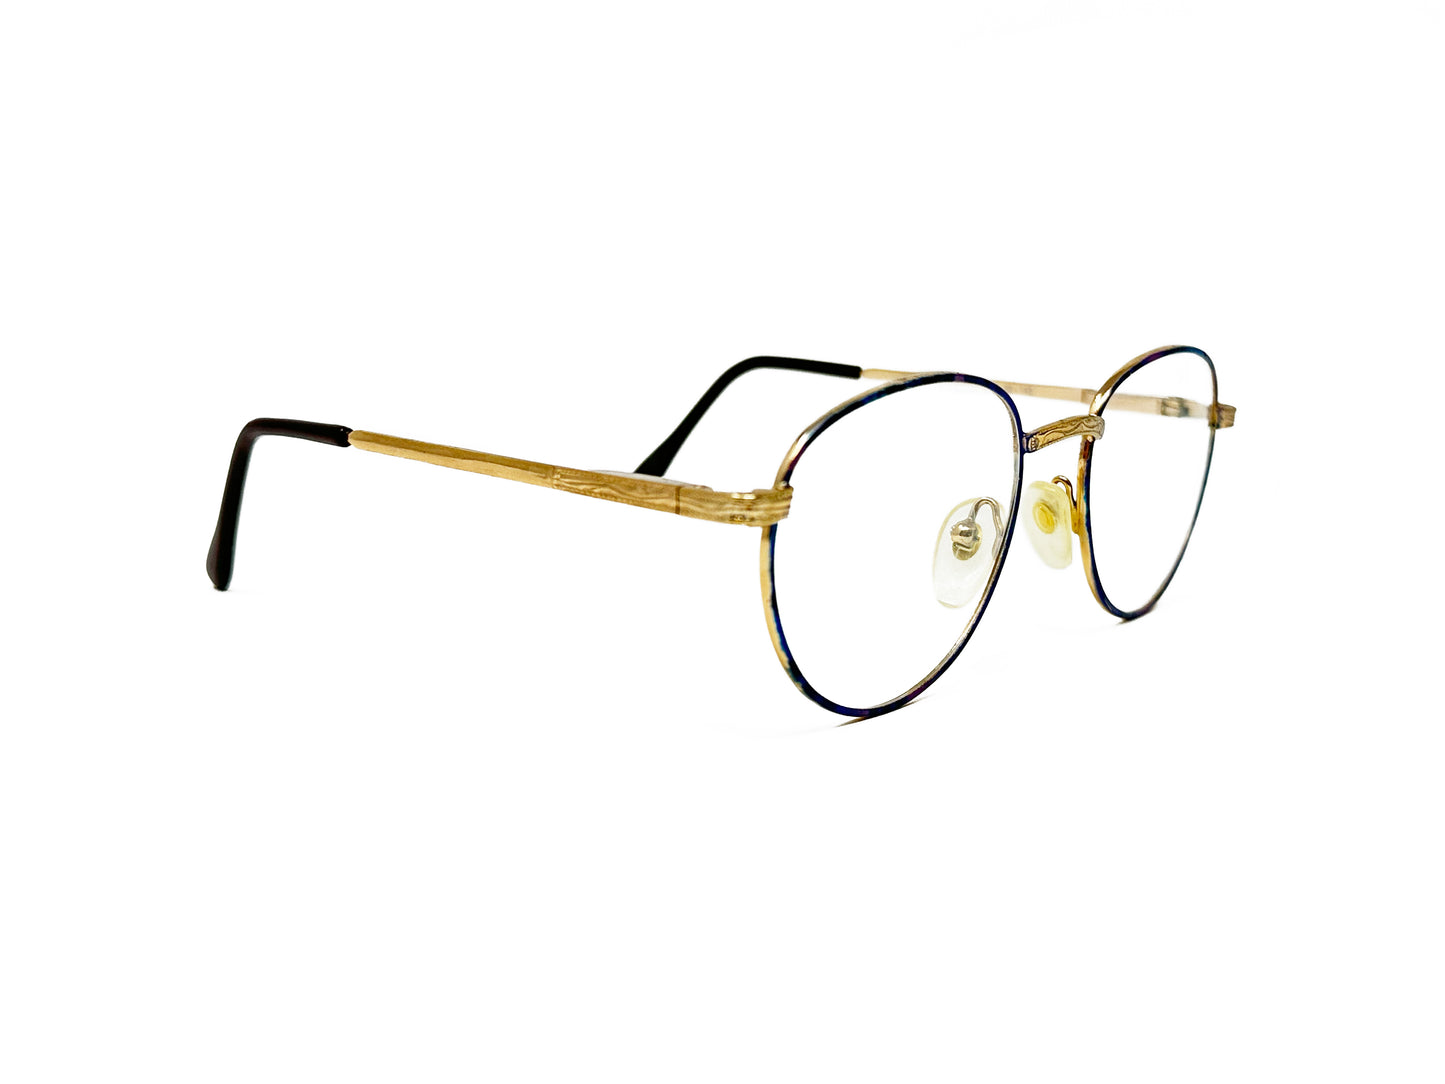 Coast round-pantos shaped metal glasses. Model: 425. Color: Gold/Violet. Side view.